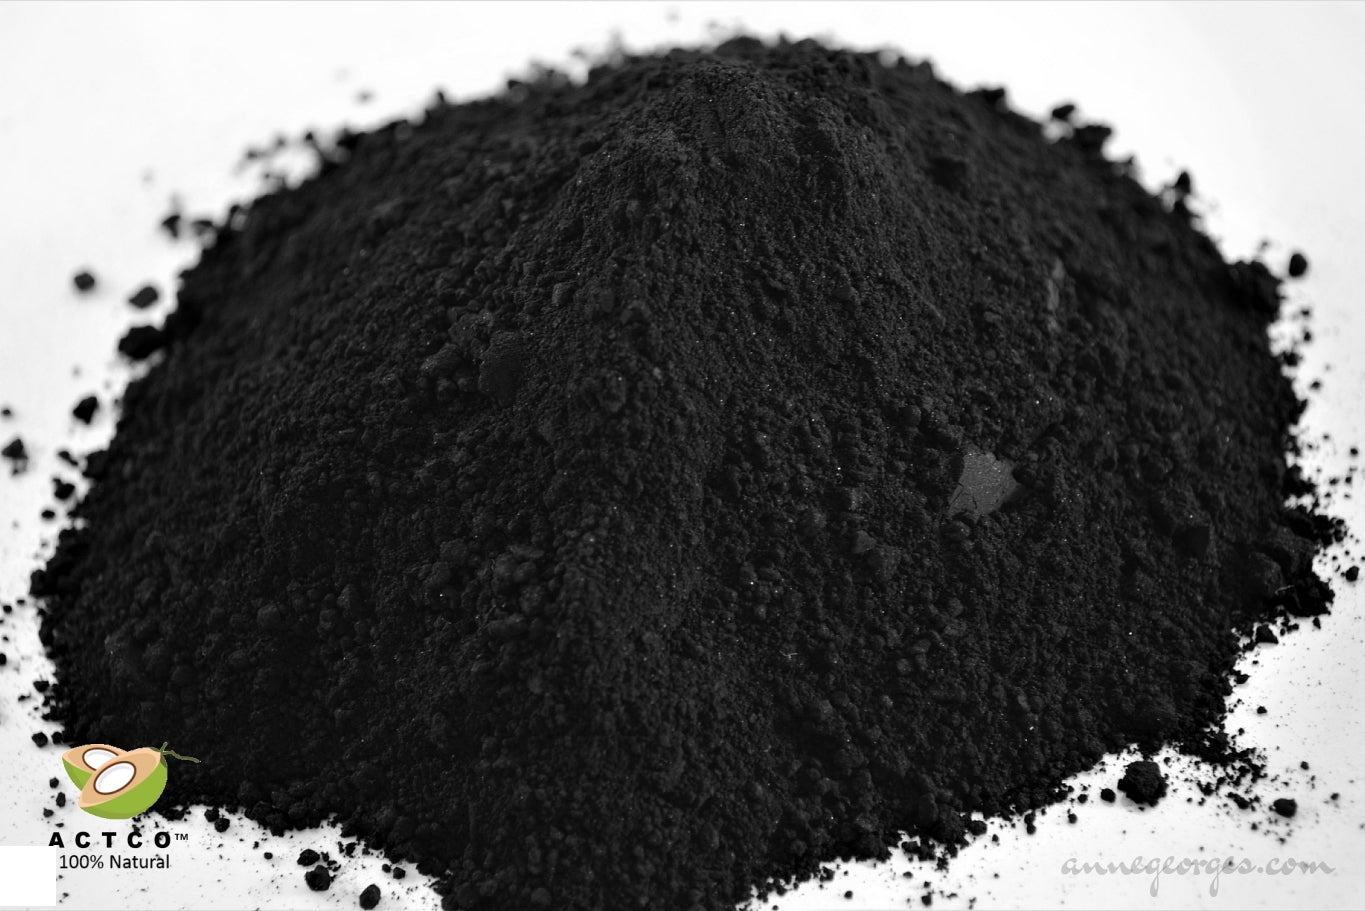 2 lb Carbon Powder - Activated Charcoal Powder - 100% Carbon